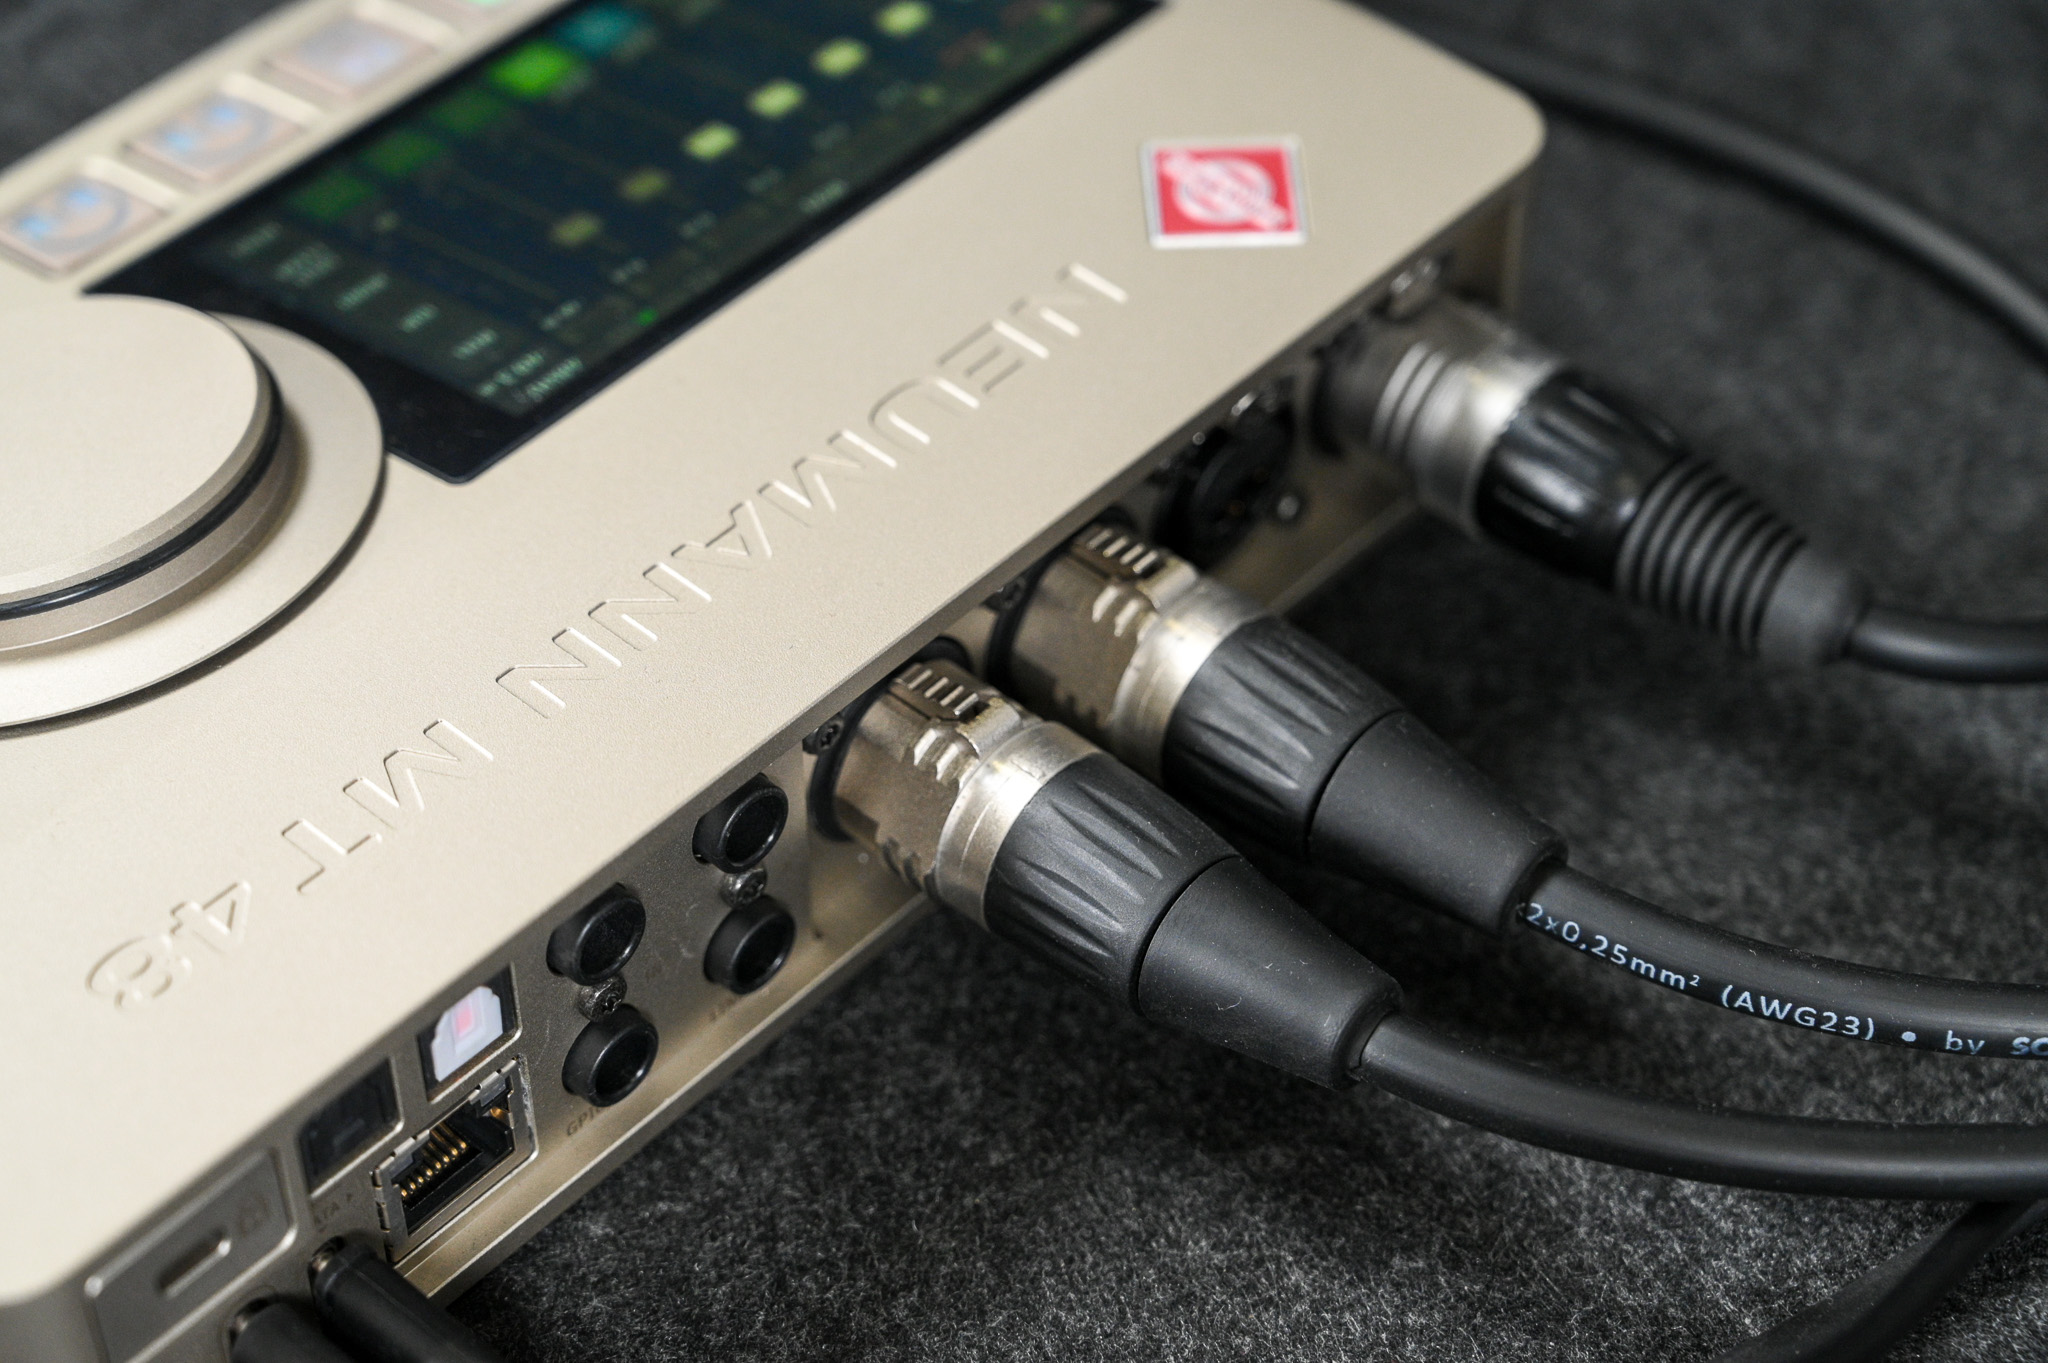 tinhte-neumann-kh-120-ii-mt-48-monitor-speakers-active-speakers-audio-interface (20).jpg